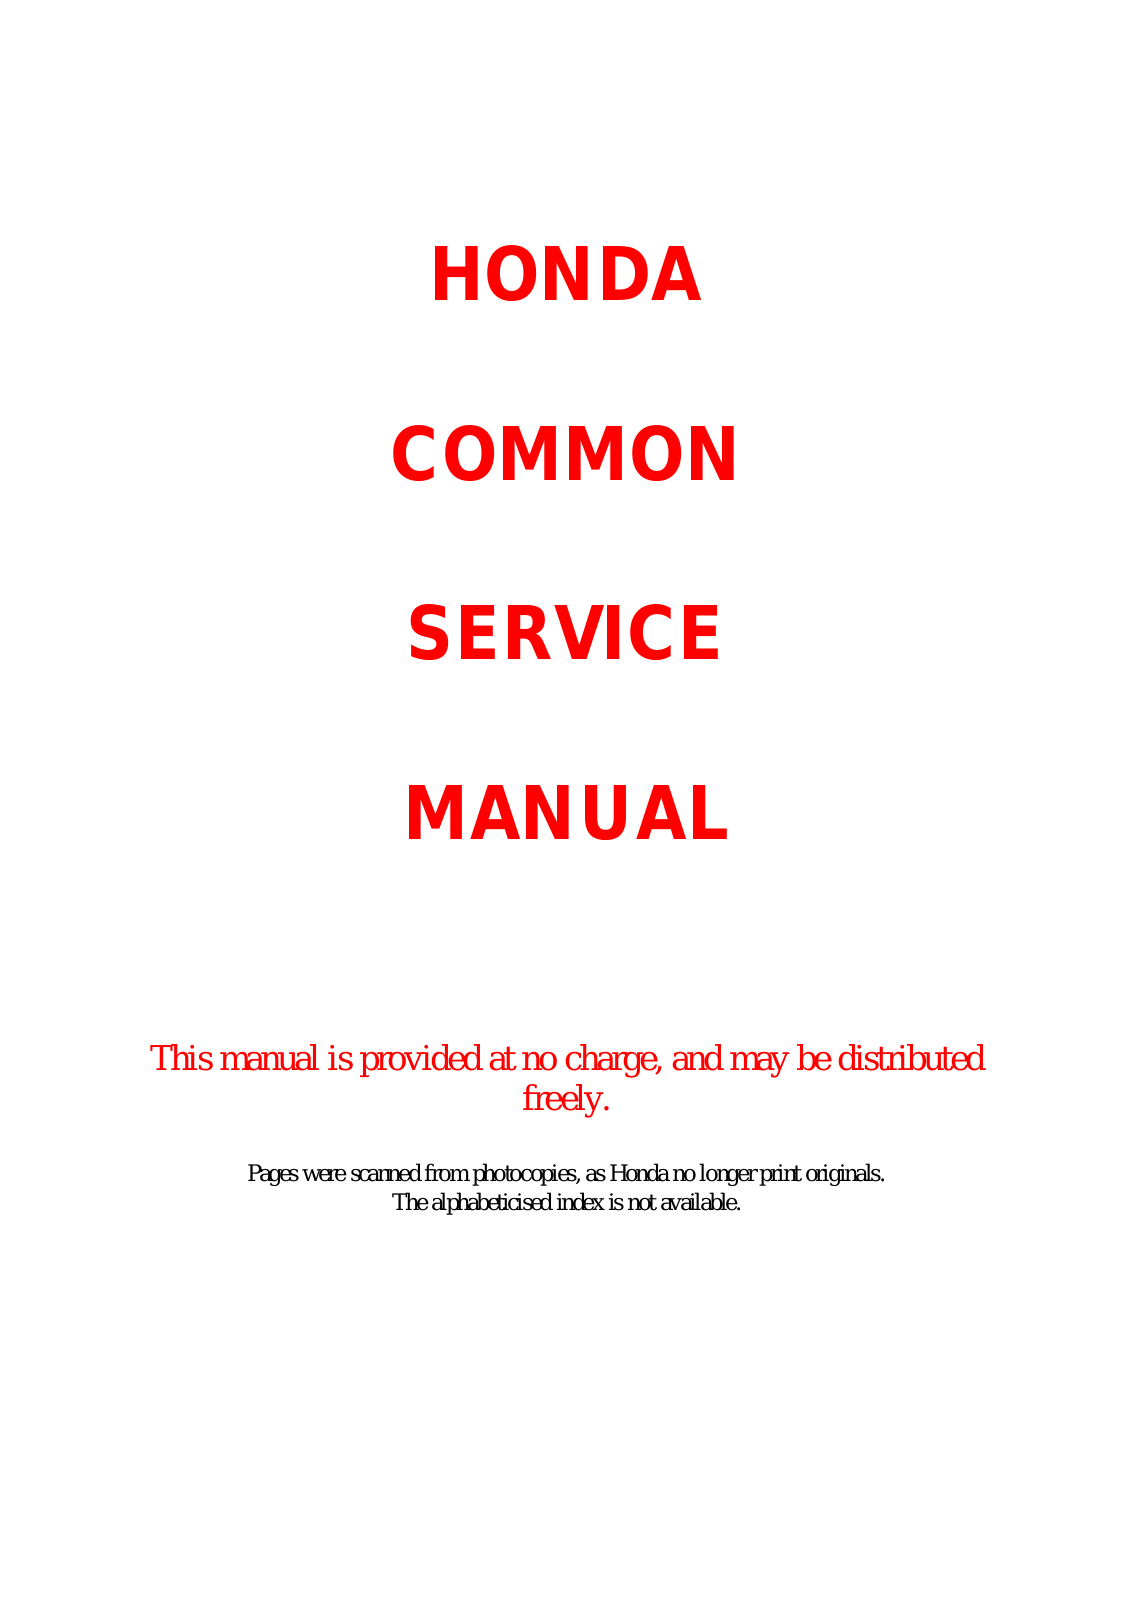 Honda common Service Manual